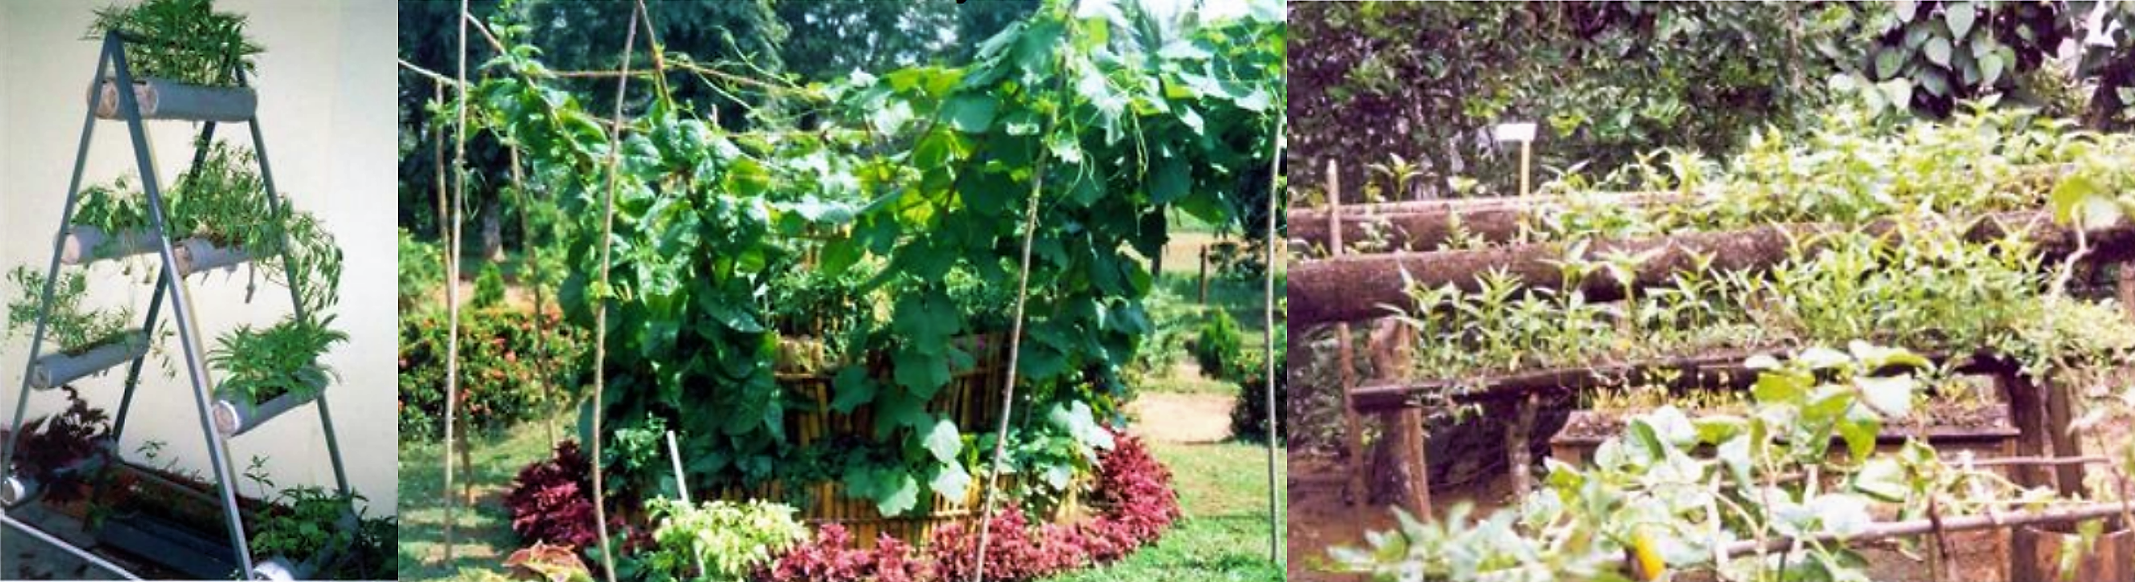 Cultivation ladder, cultivation pyramid, cultivation rack, Gampaha, Sri Lanka. Source: RANASINGHE (2007)